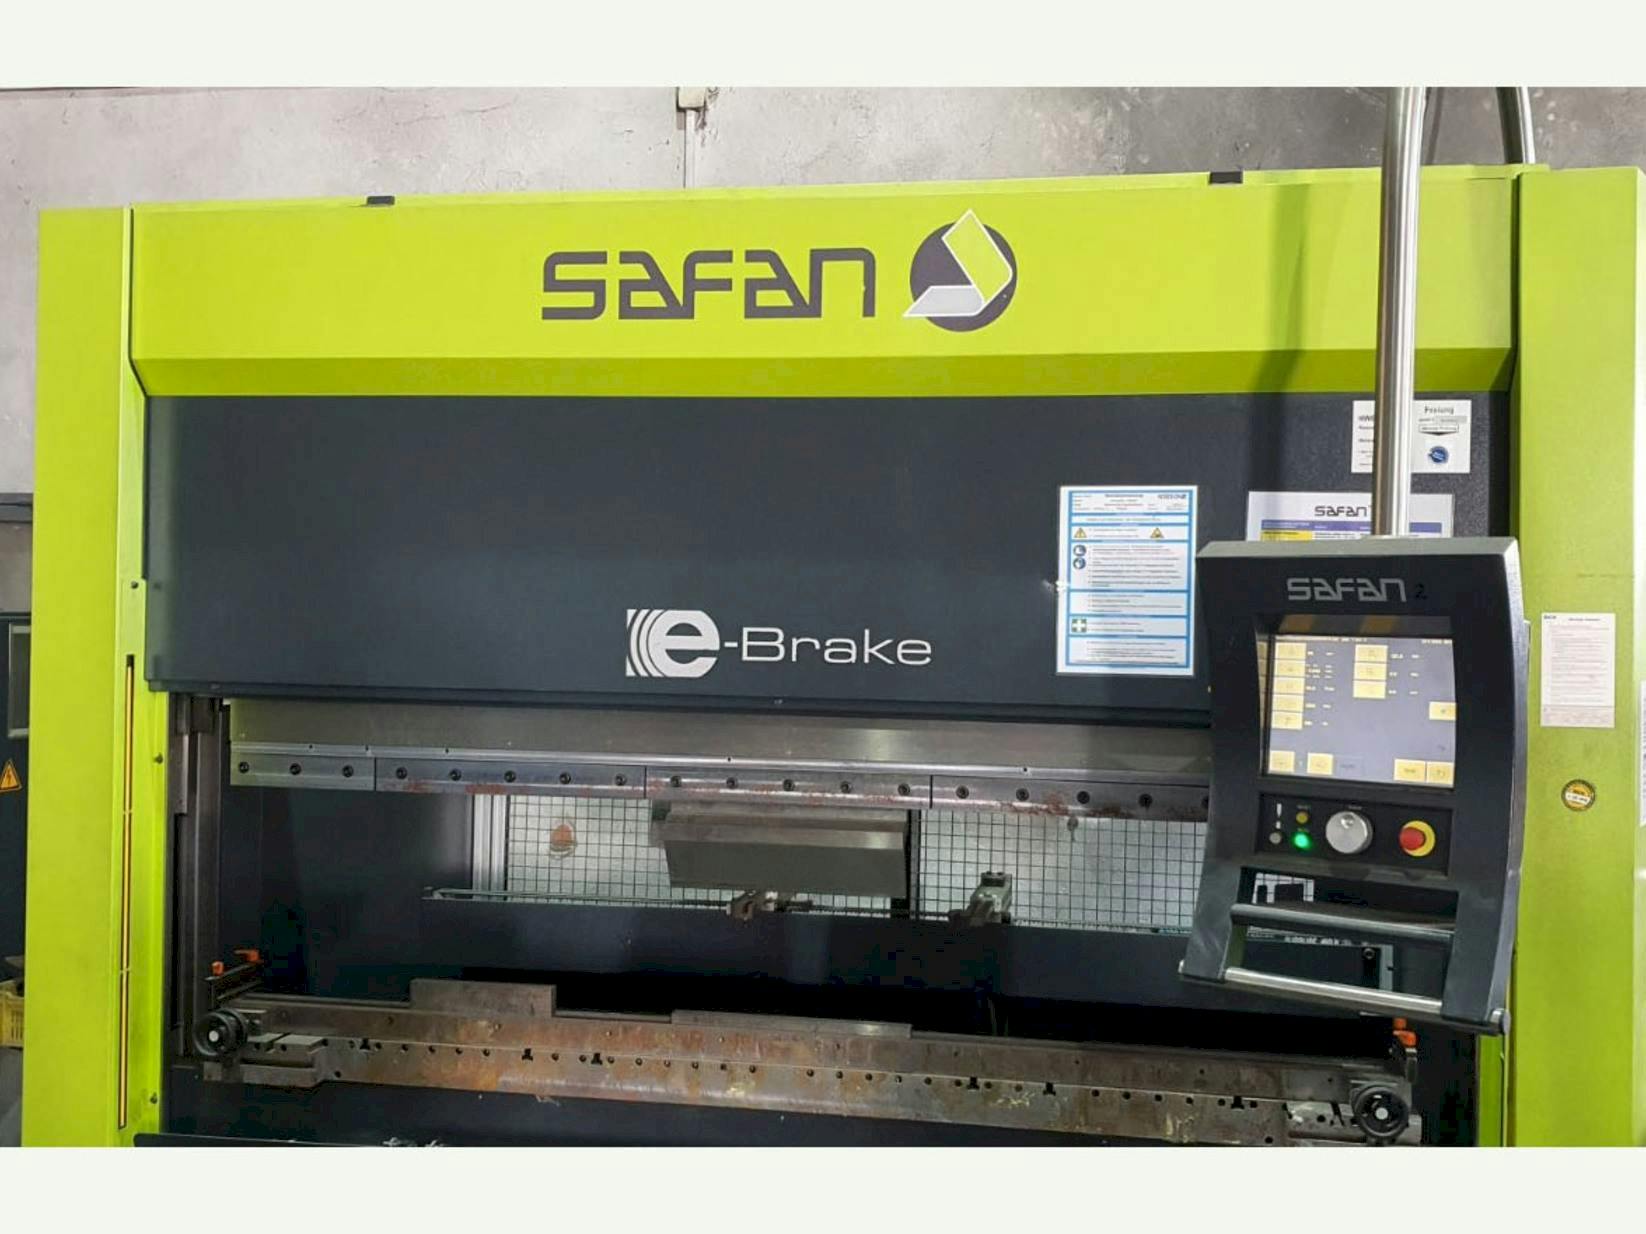 Vista frontal de la máquina Safan E-brake 50-2050 ts1